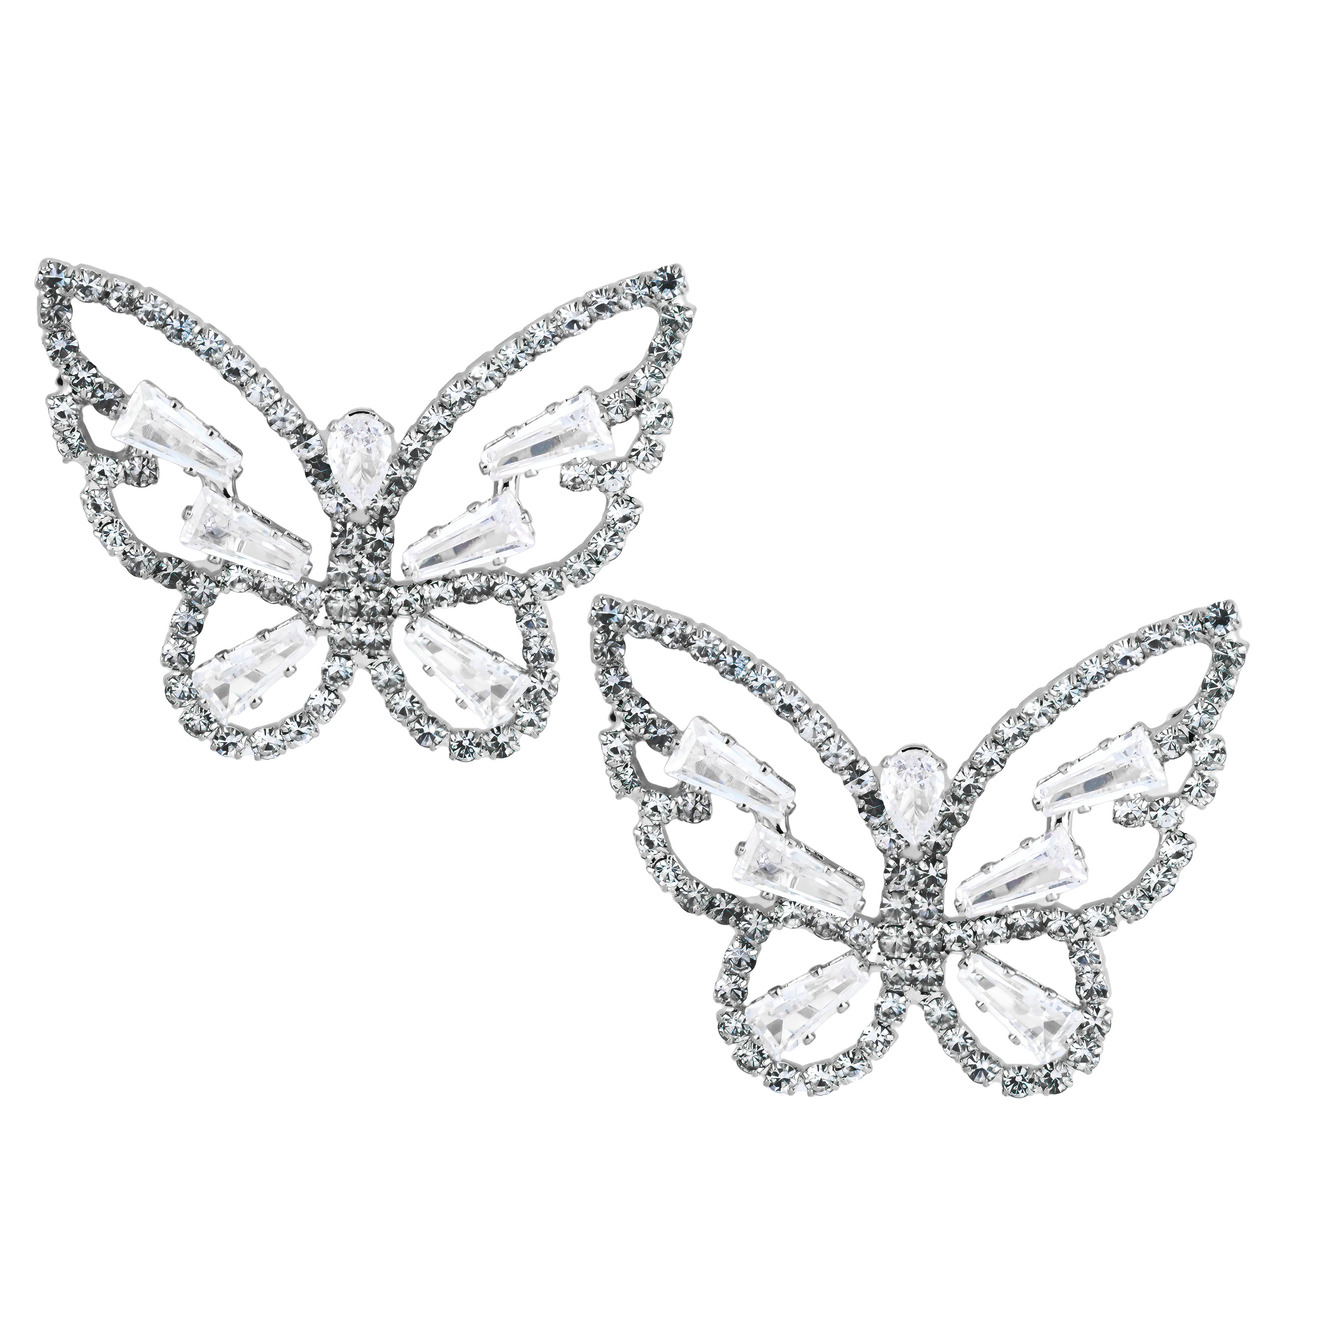 Herald Percy Серебристые серьги-бабочки с кристаллами herald percy серебристые серьги крестики с кристаллами